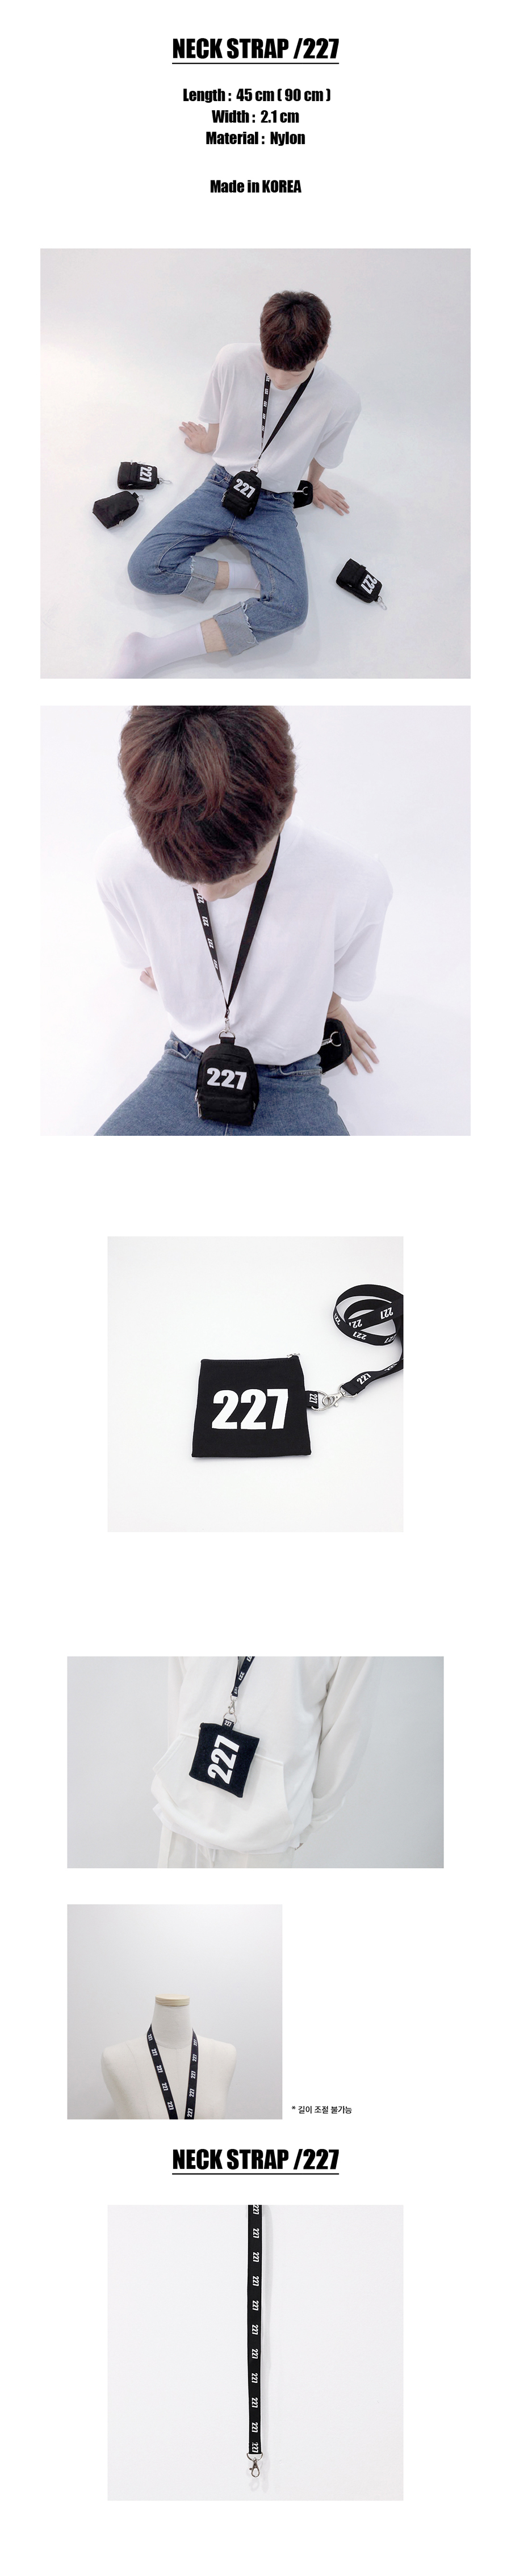 NECK STRAP 9,000원 - 227(이이칠) 패션잡화, 가방소품, 스트랩, 패브릭스트랩 바보사랑 NECK STRAP 9,000원 - 227(이이칠) 패션잡화, 가방소품, 스트랩, 패브릭스트랩 바보사랑